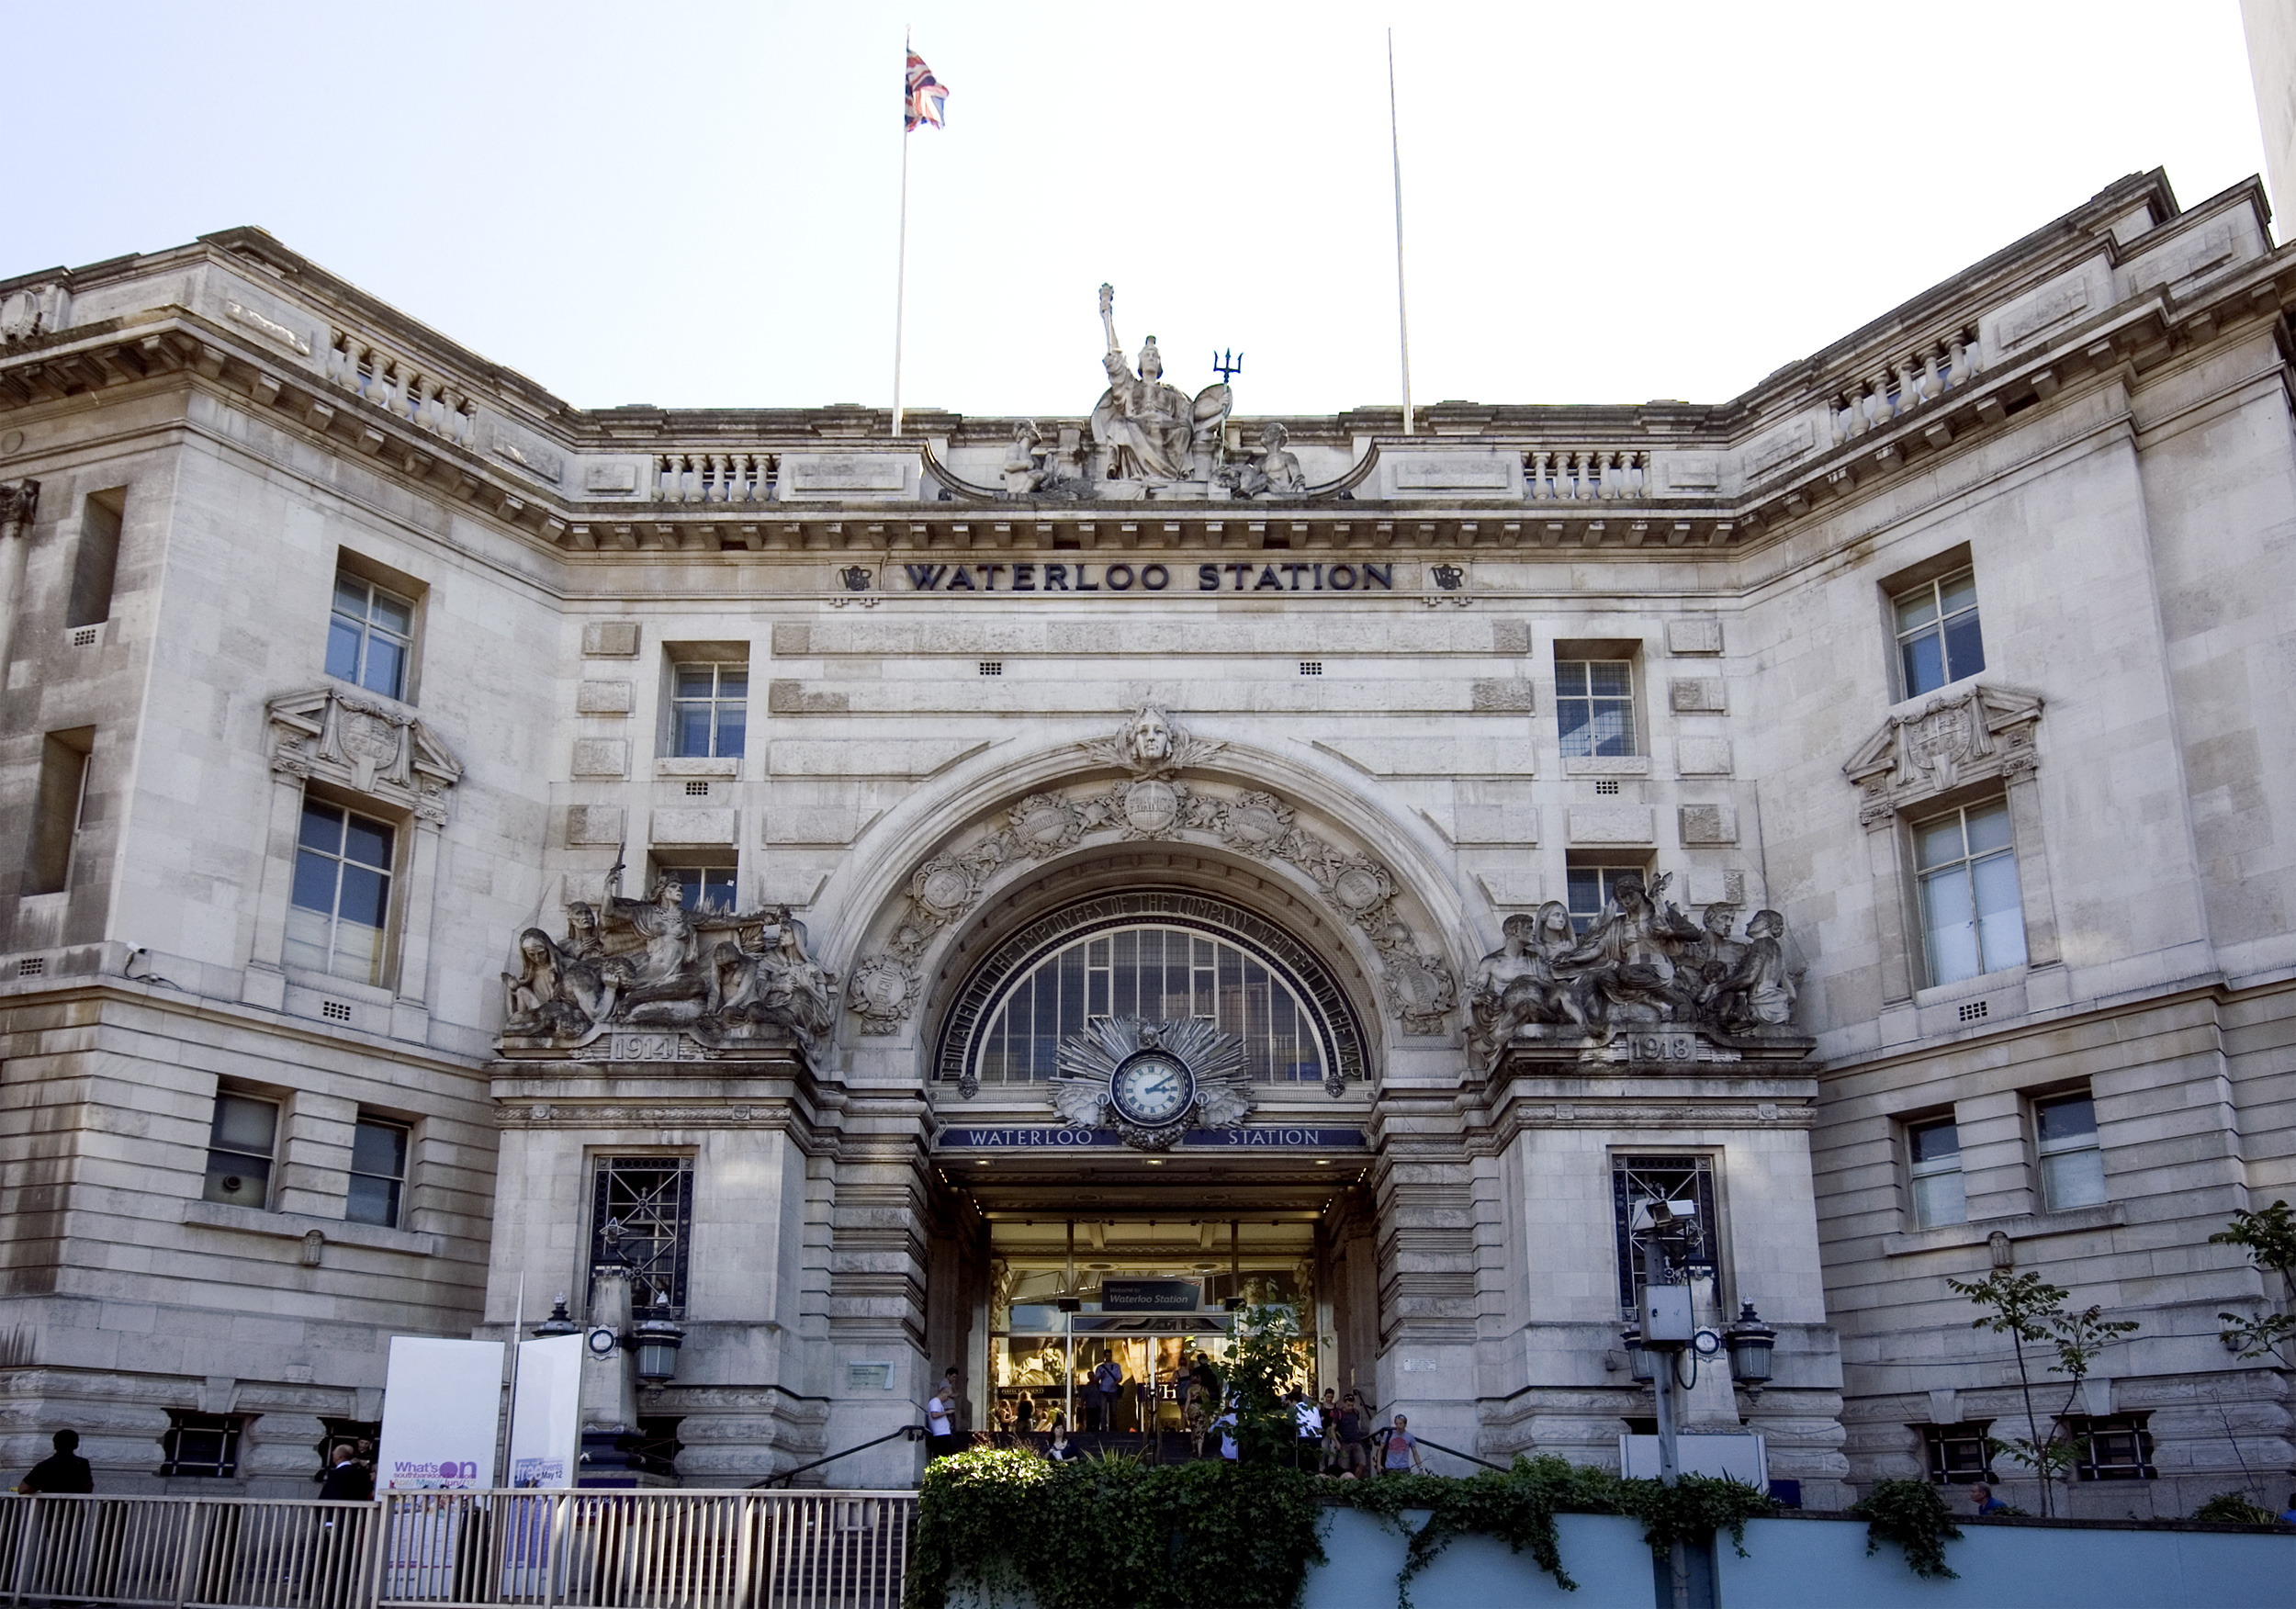 Waterloo Station Victory Arch.jpg